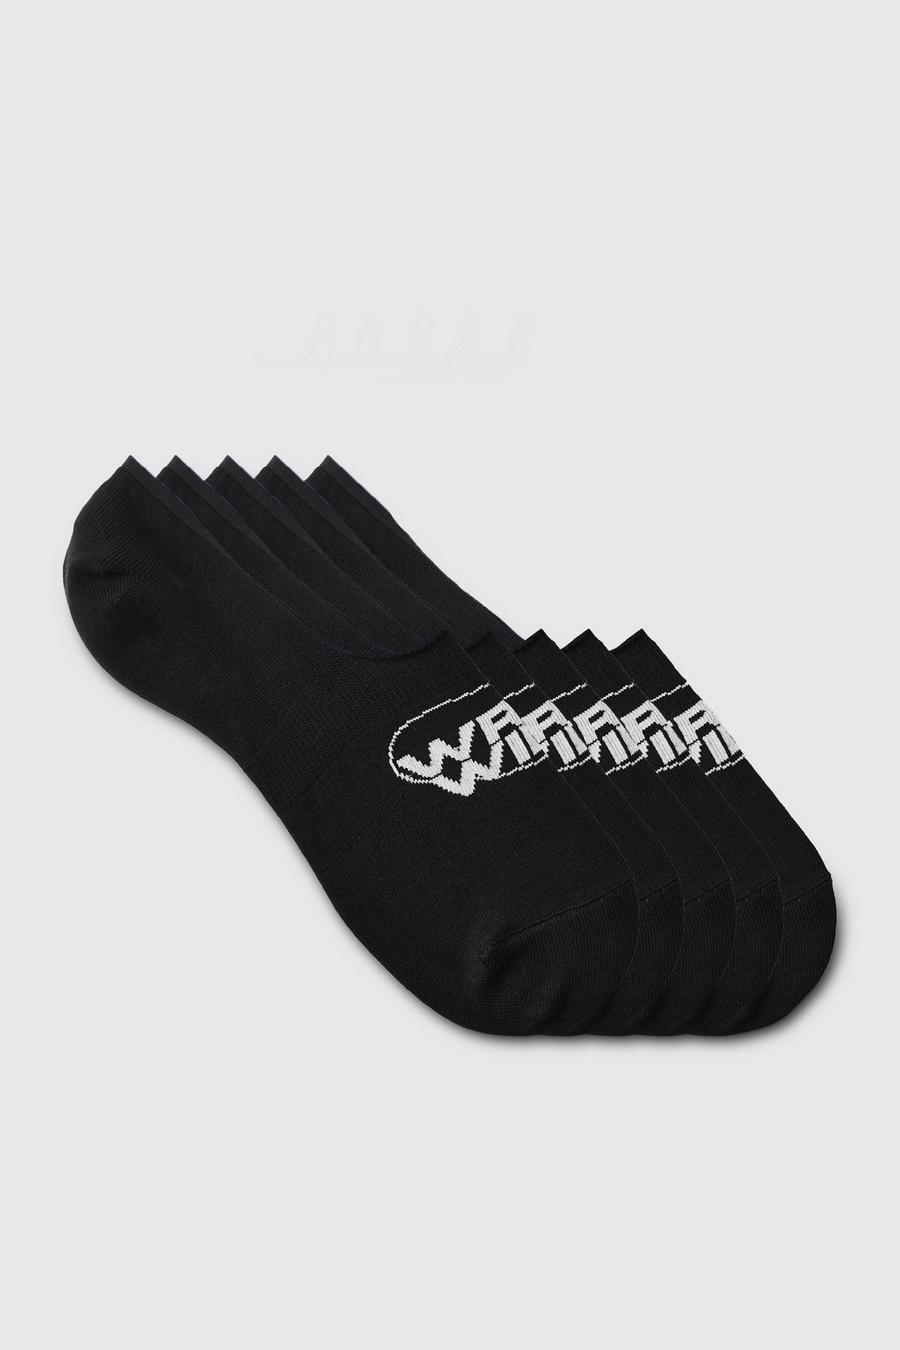 5er-Pack unsichtbare Worldwide-Socken, Black